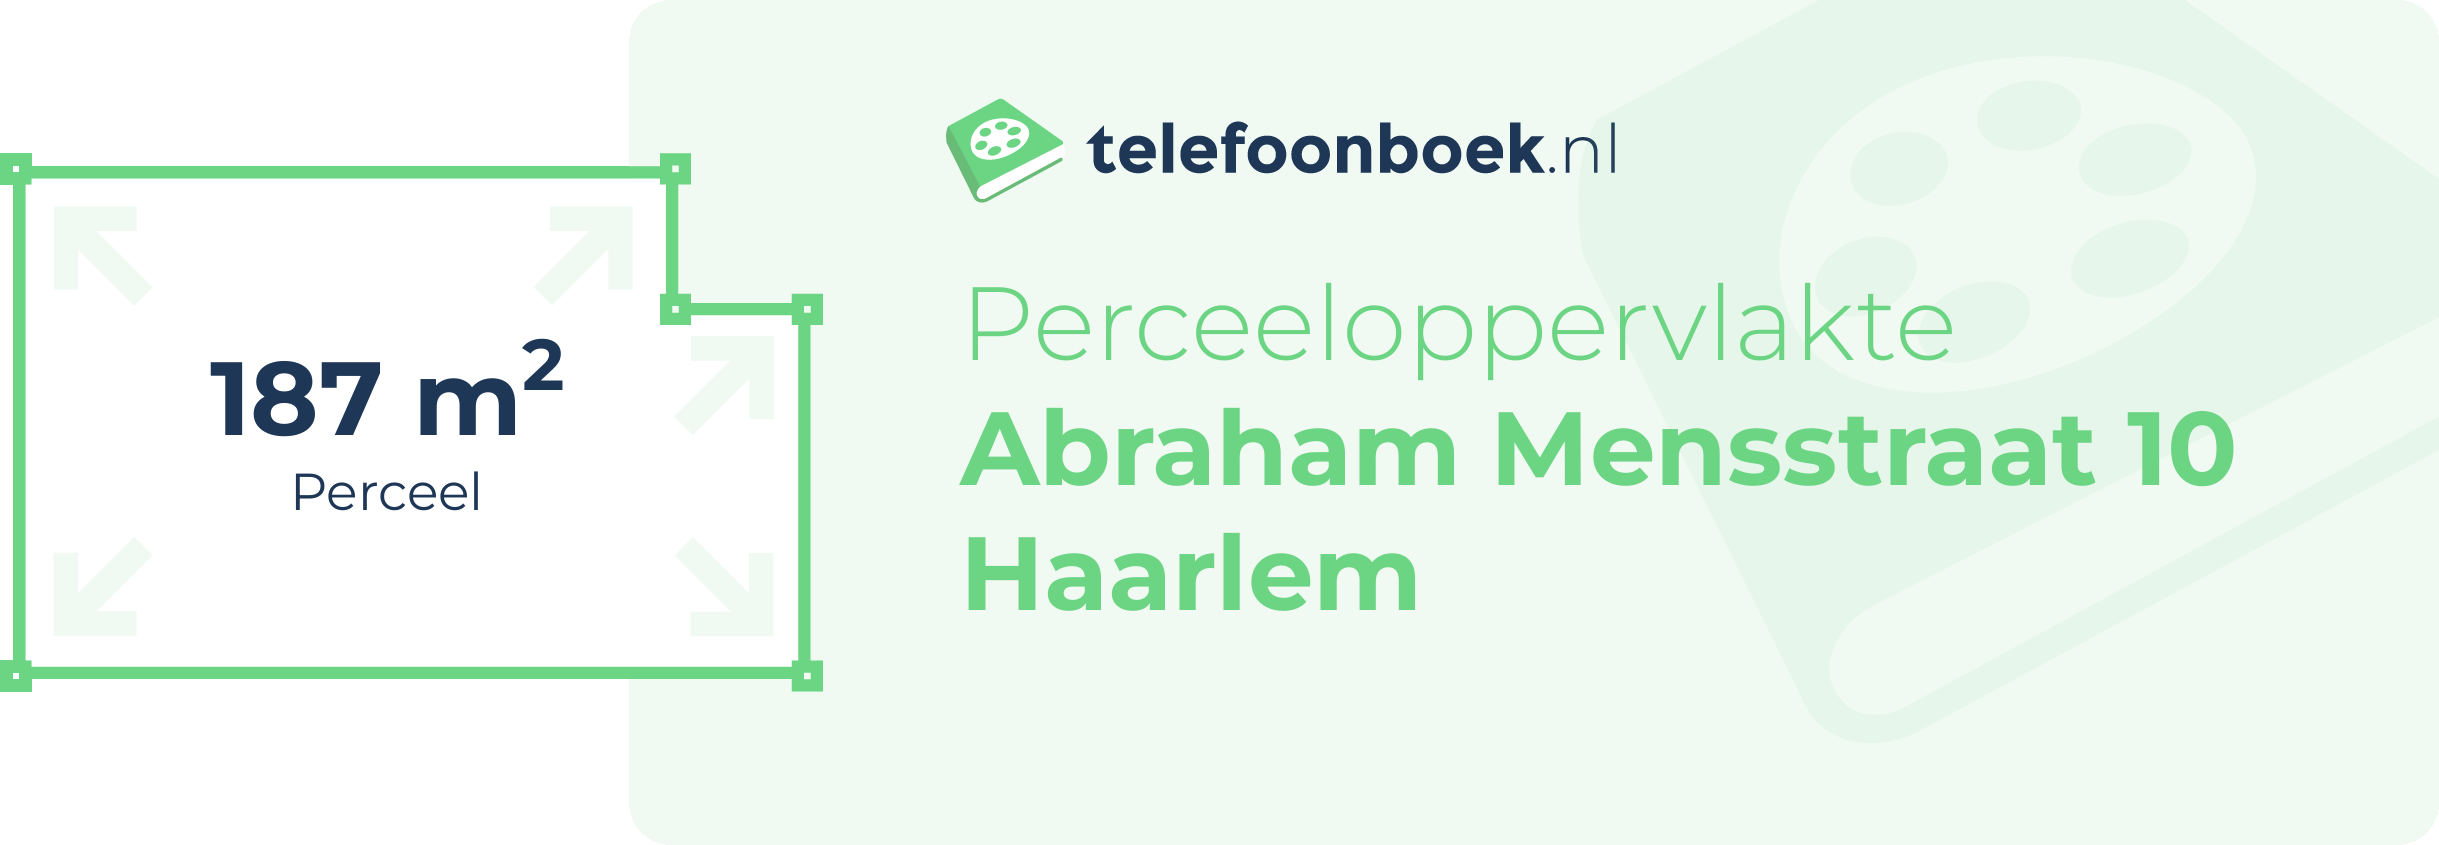 Perceeloppervlakte Abraham Mensstraat 10 Haarlem